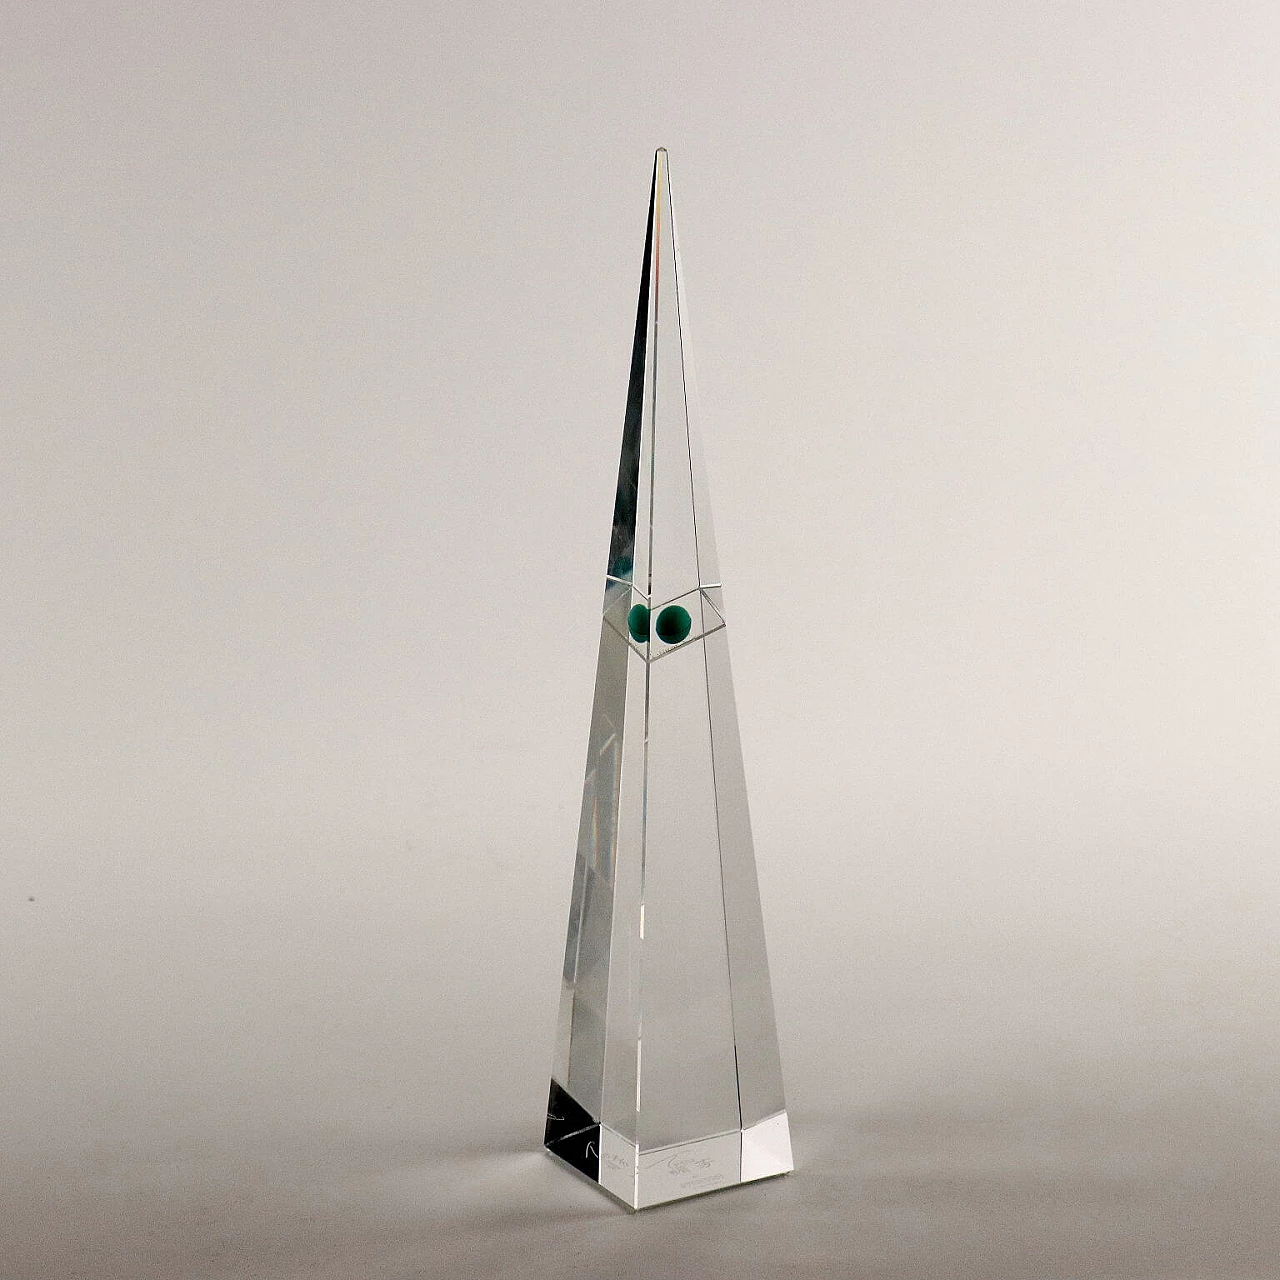 Obelisco in cristallo torre di Hong Kong di Tsang per Swarowski selection, 1997 1